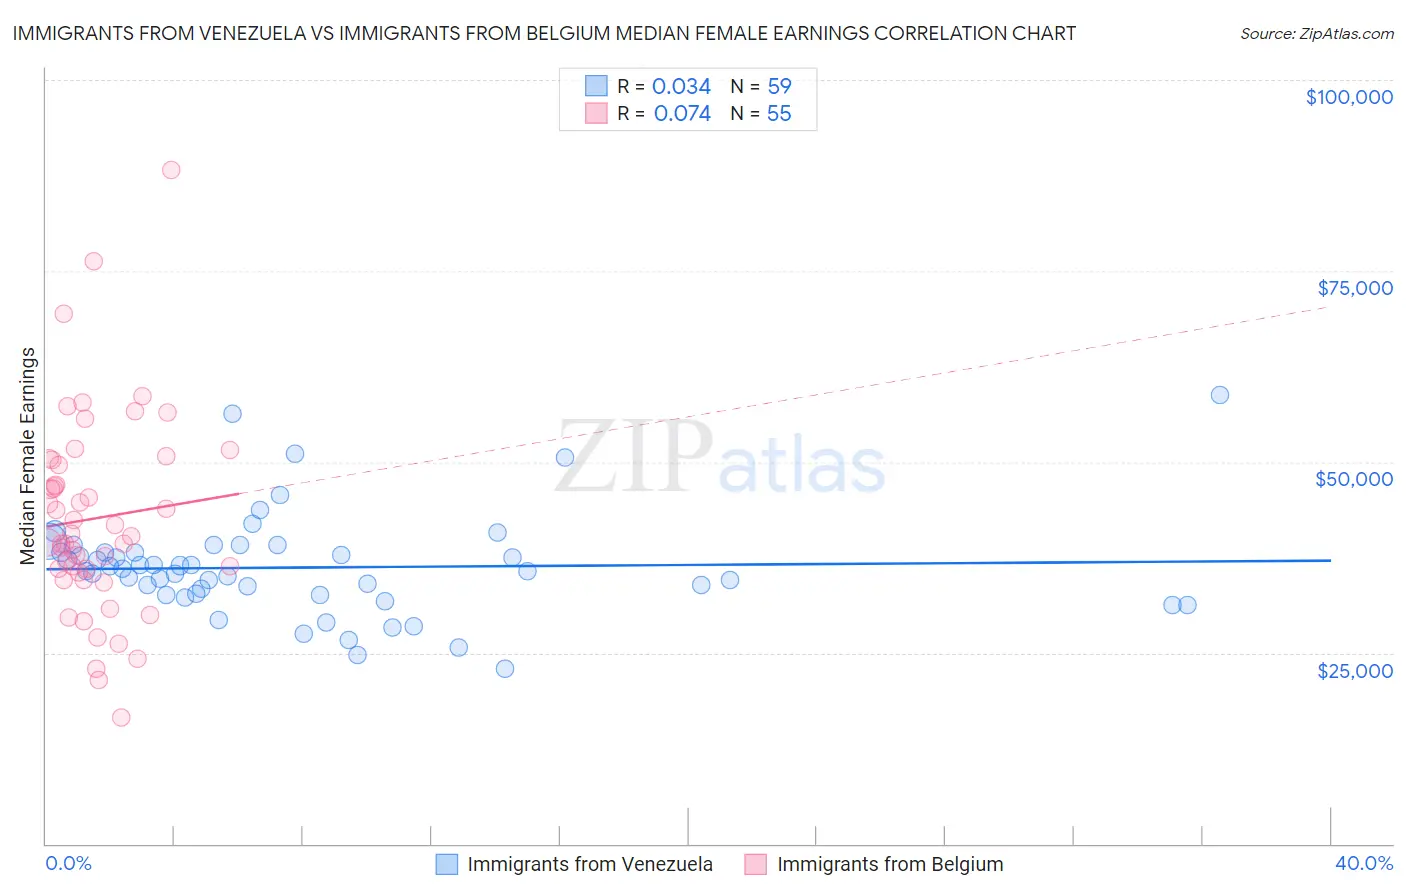 Immigrants from Venezuela vs Immigrants from Belgium Median Female Earnings